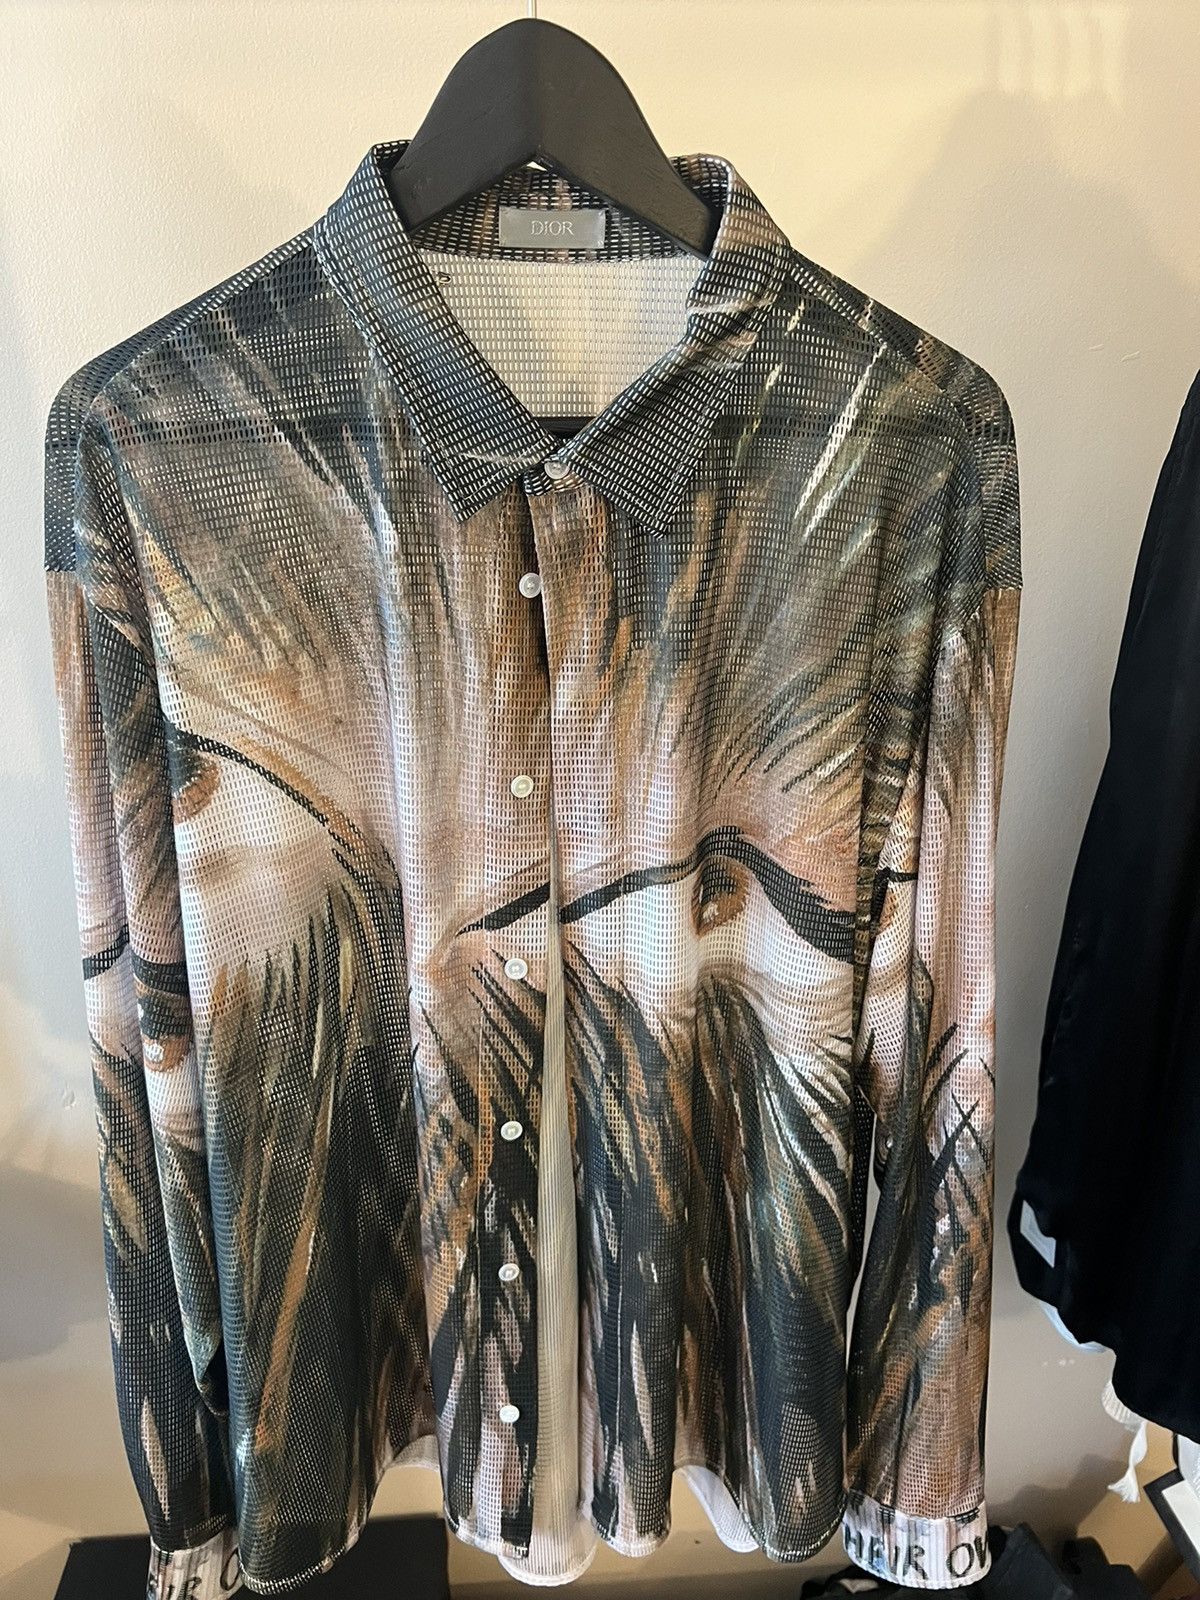 Dior Raymond pettibon x Kim Jones shirt | Grailed